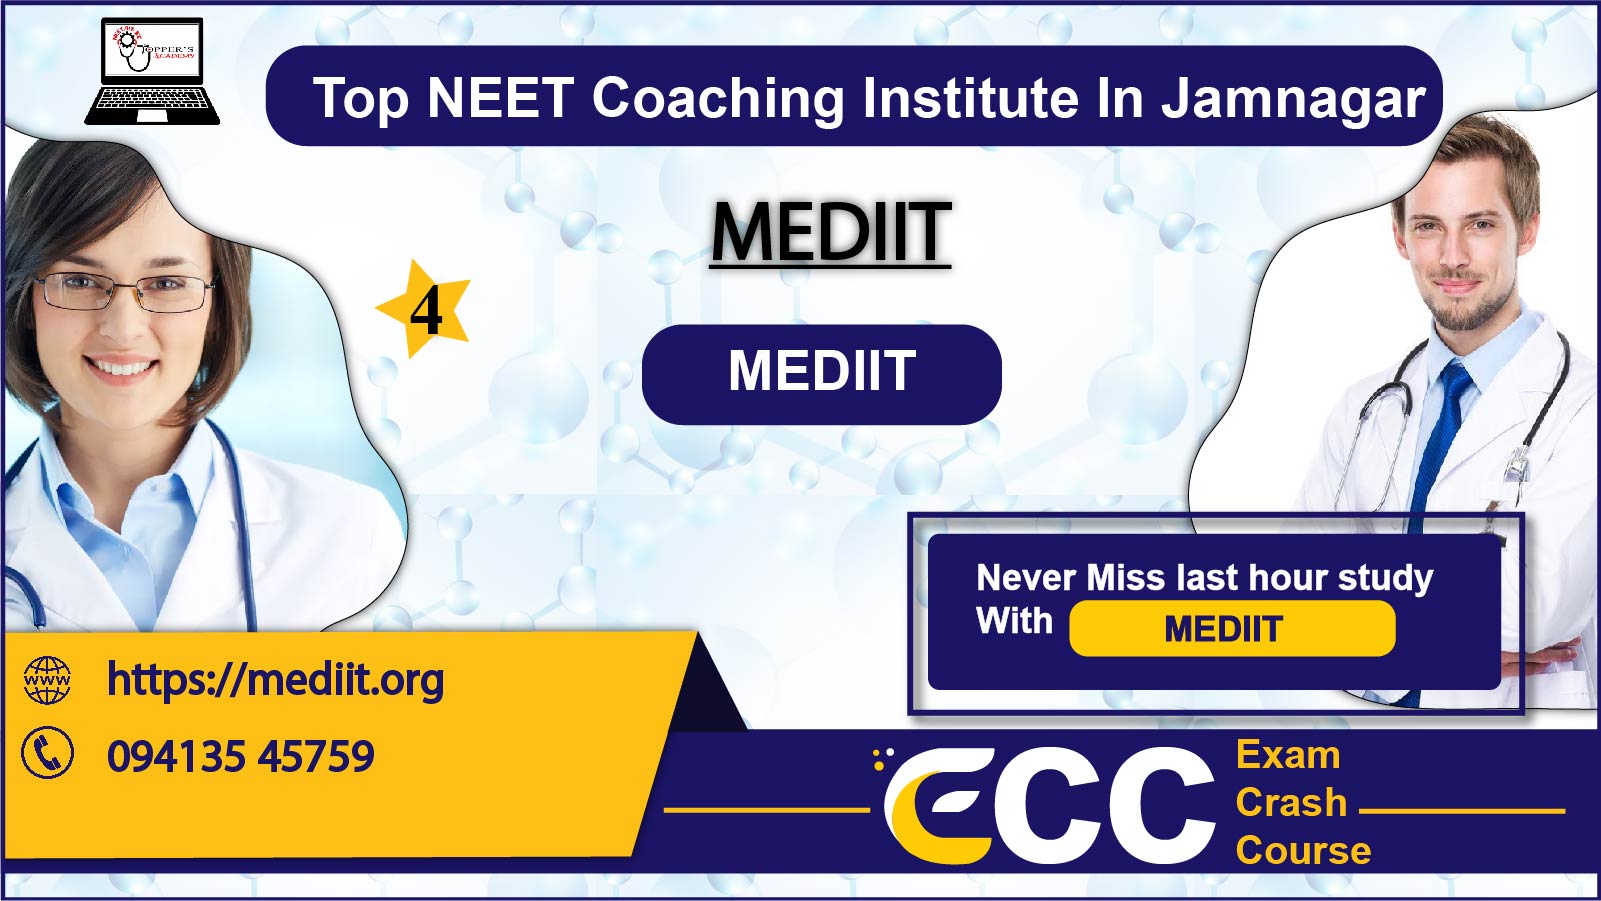 MEDIIT NEET Coaching in Jamnagar